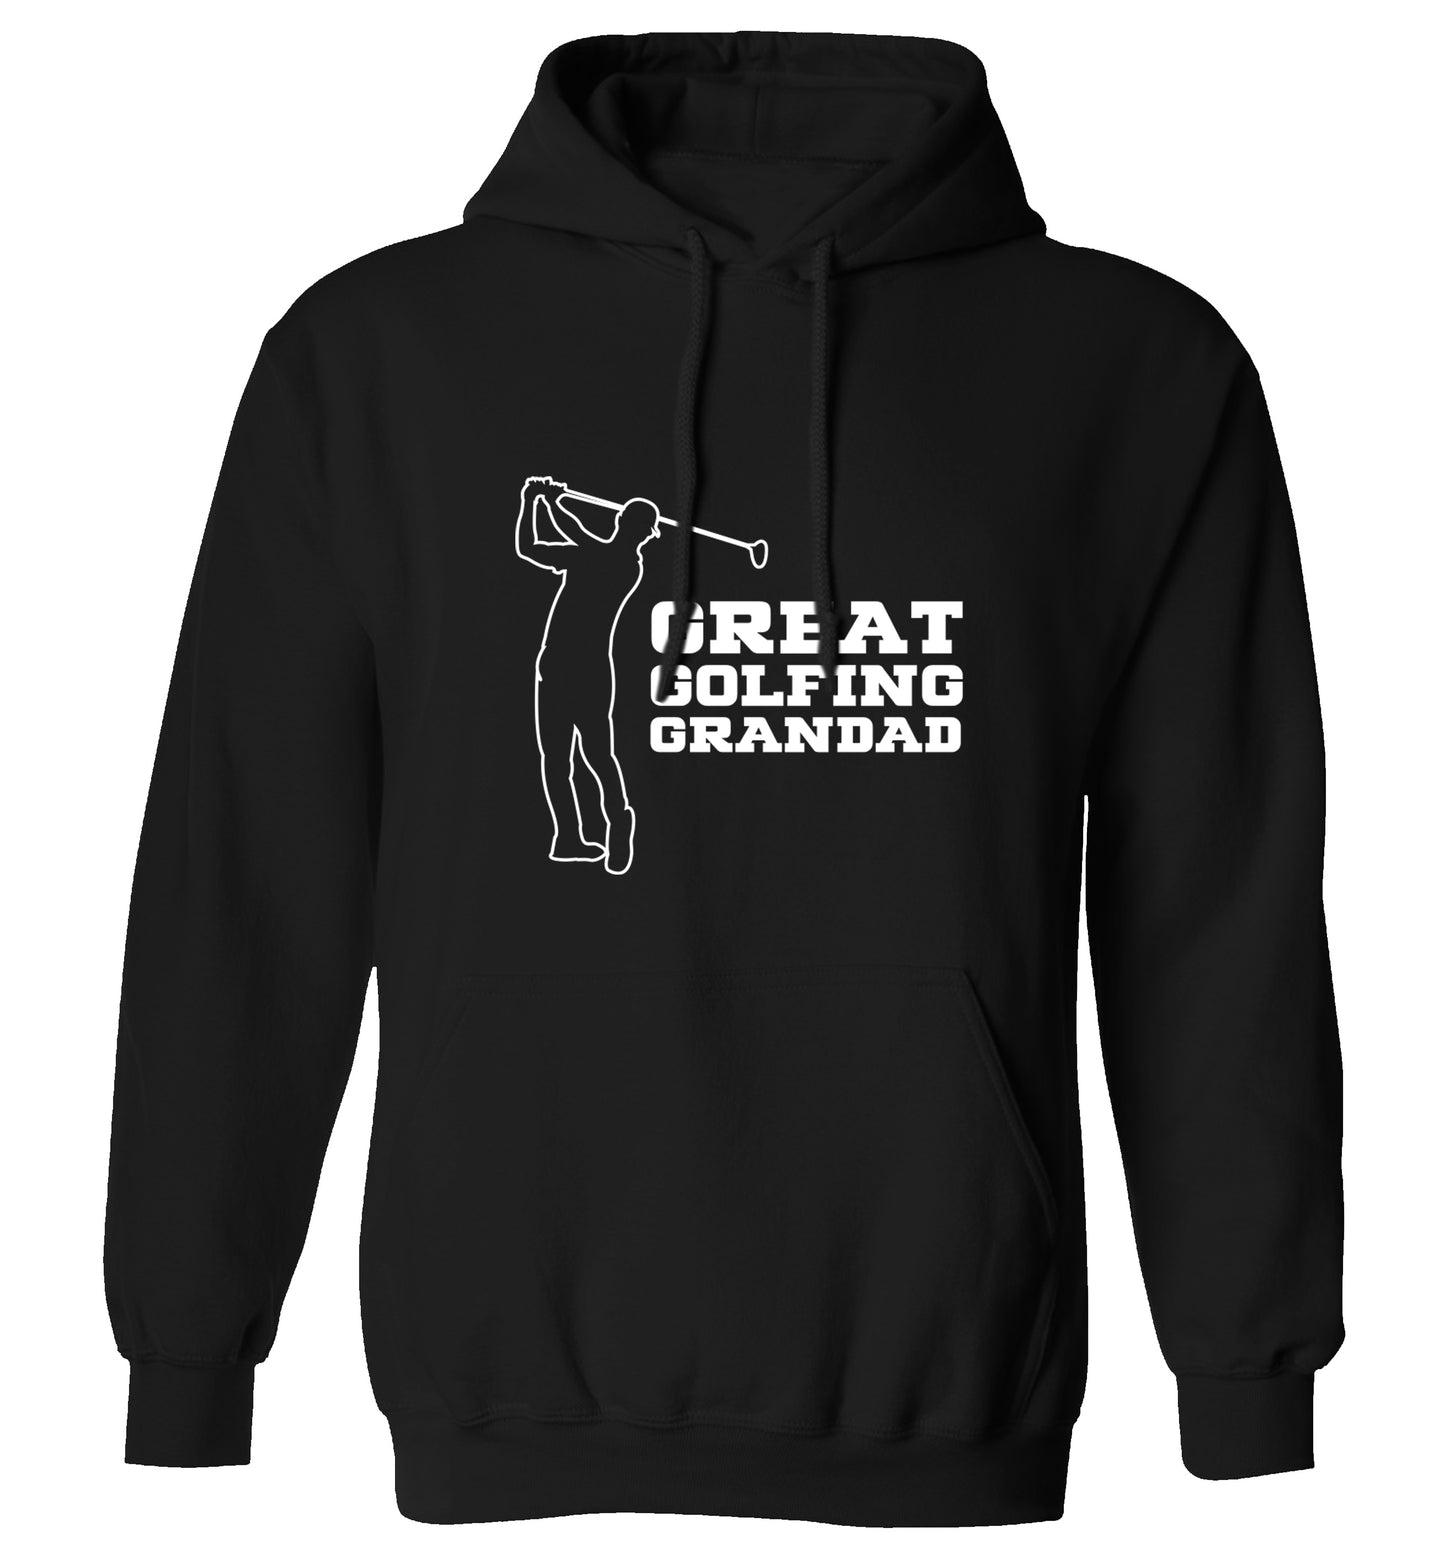 Great Golfing Grandad adults unisex black hoodie 2XL